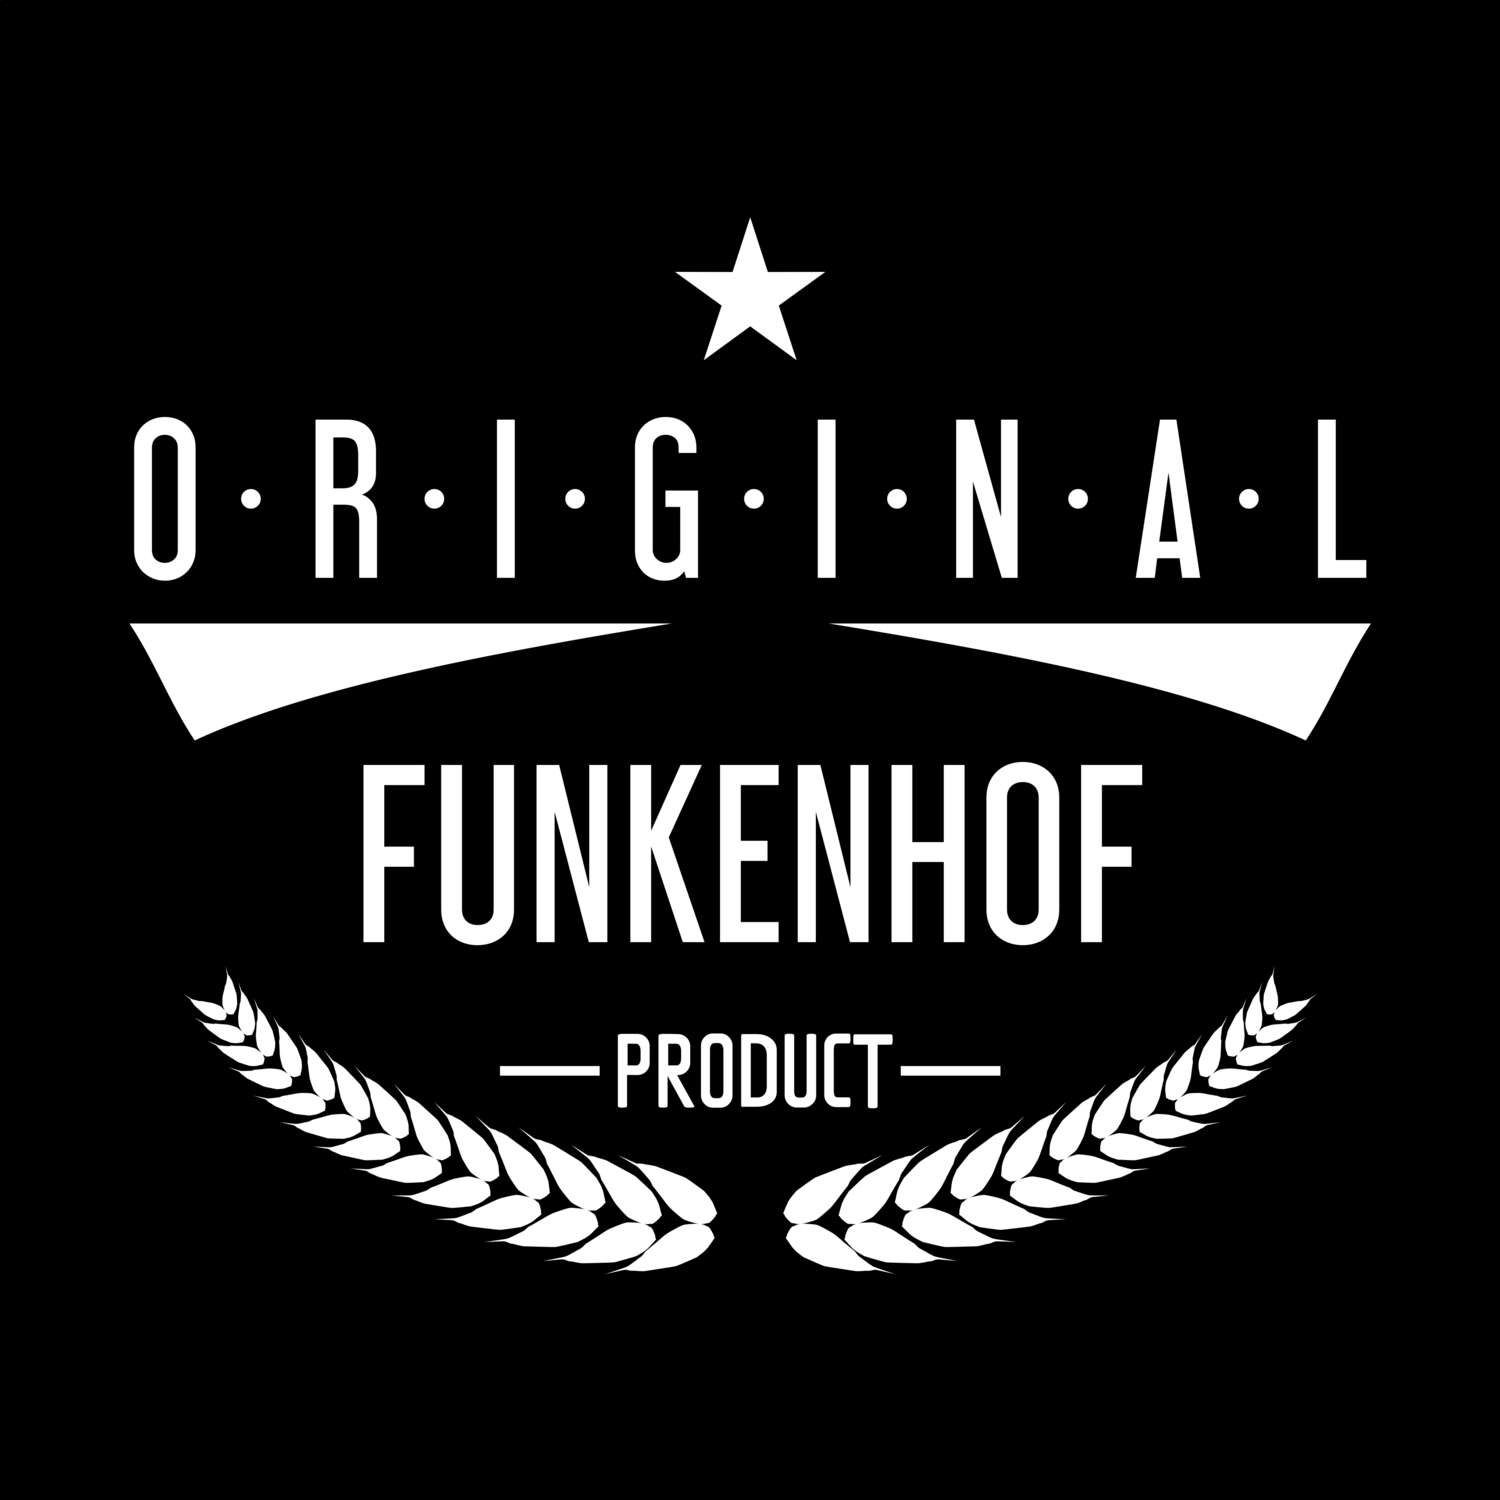 Funkenhof T-Shirt »Original Product«